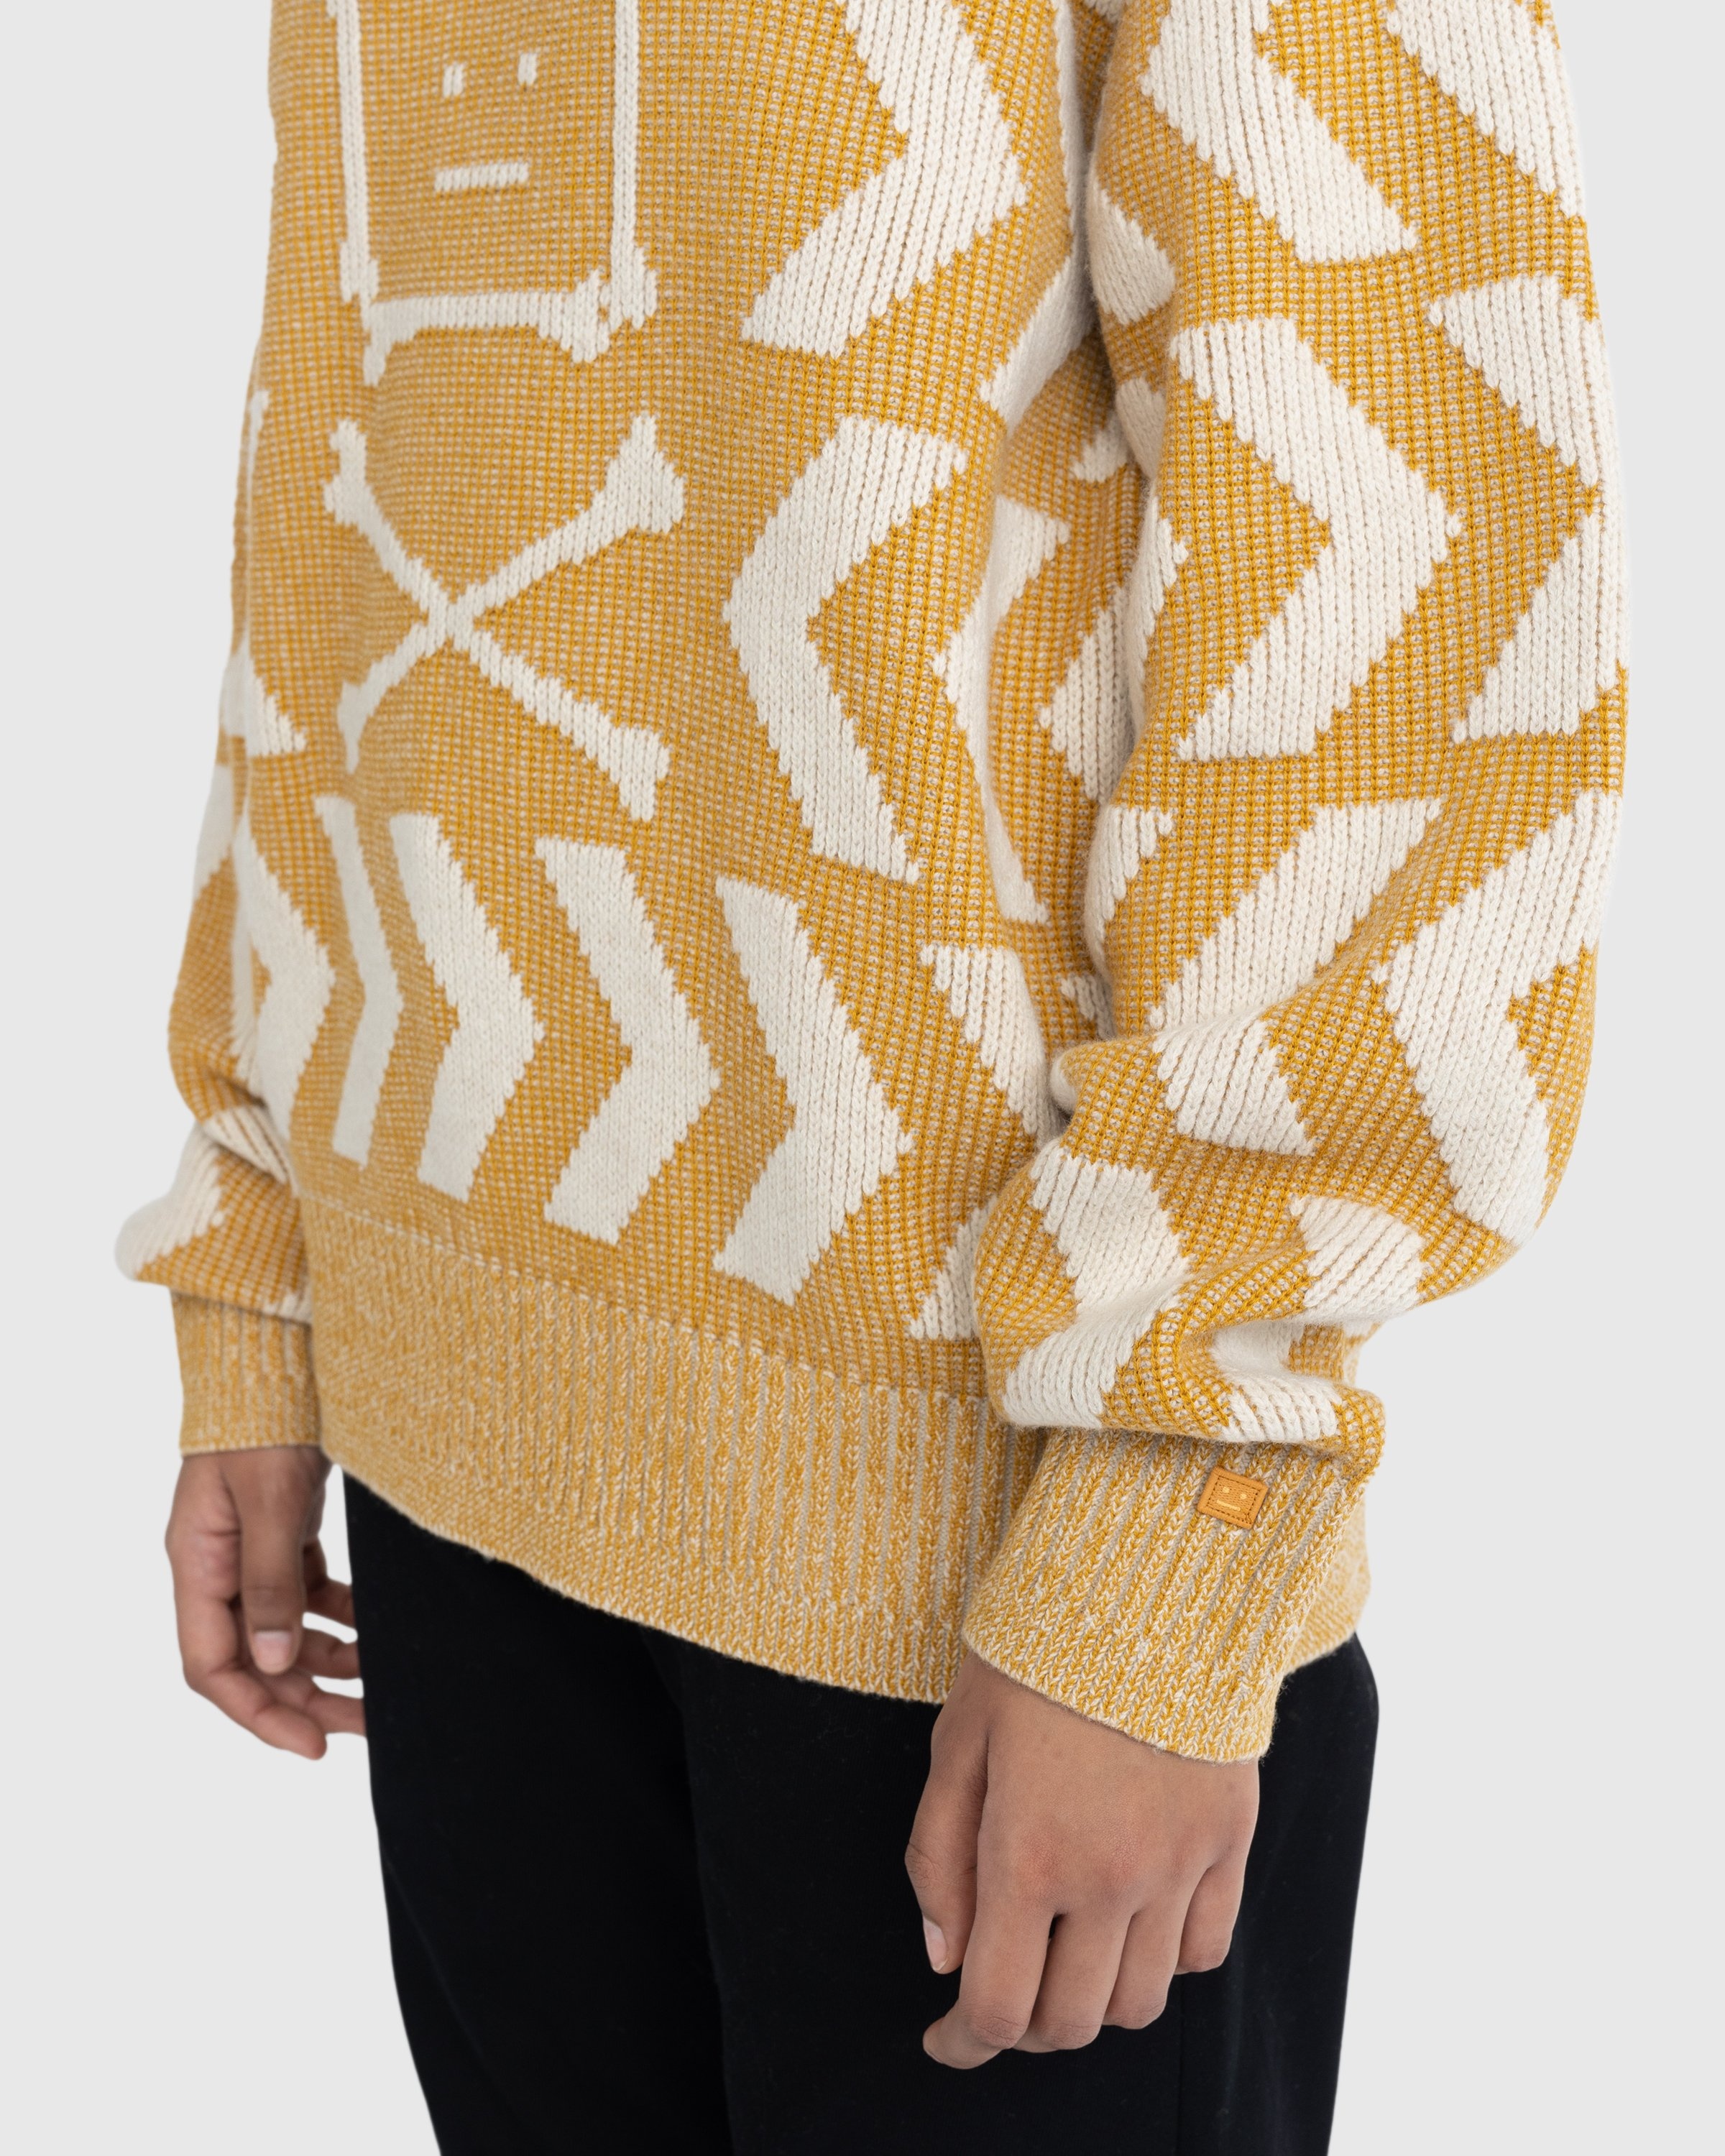 Acne Studios Leopard Jacquard Crewneck Sweater Yellow